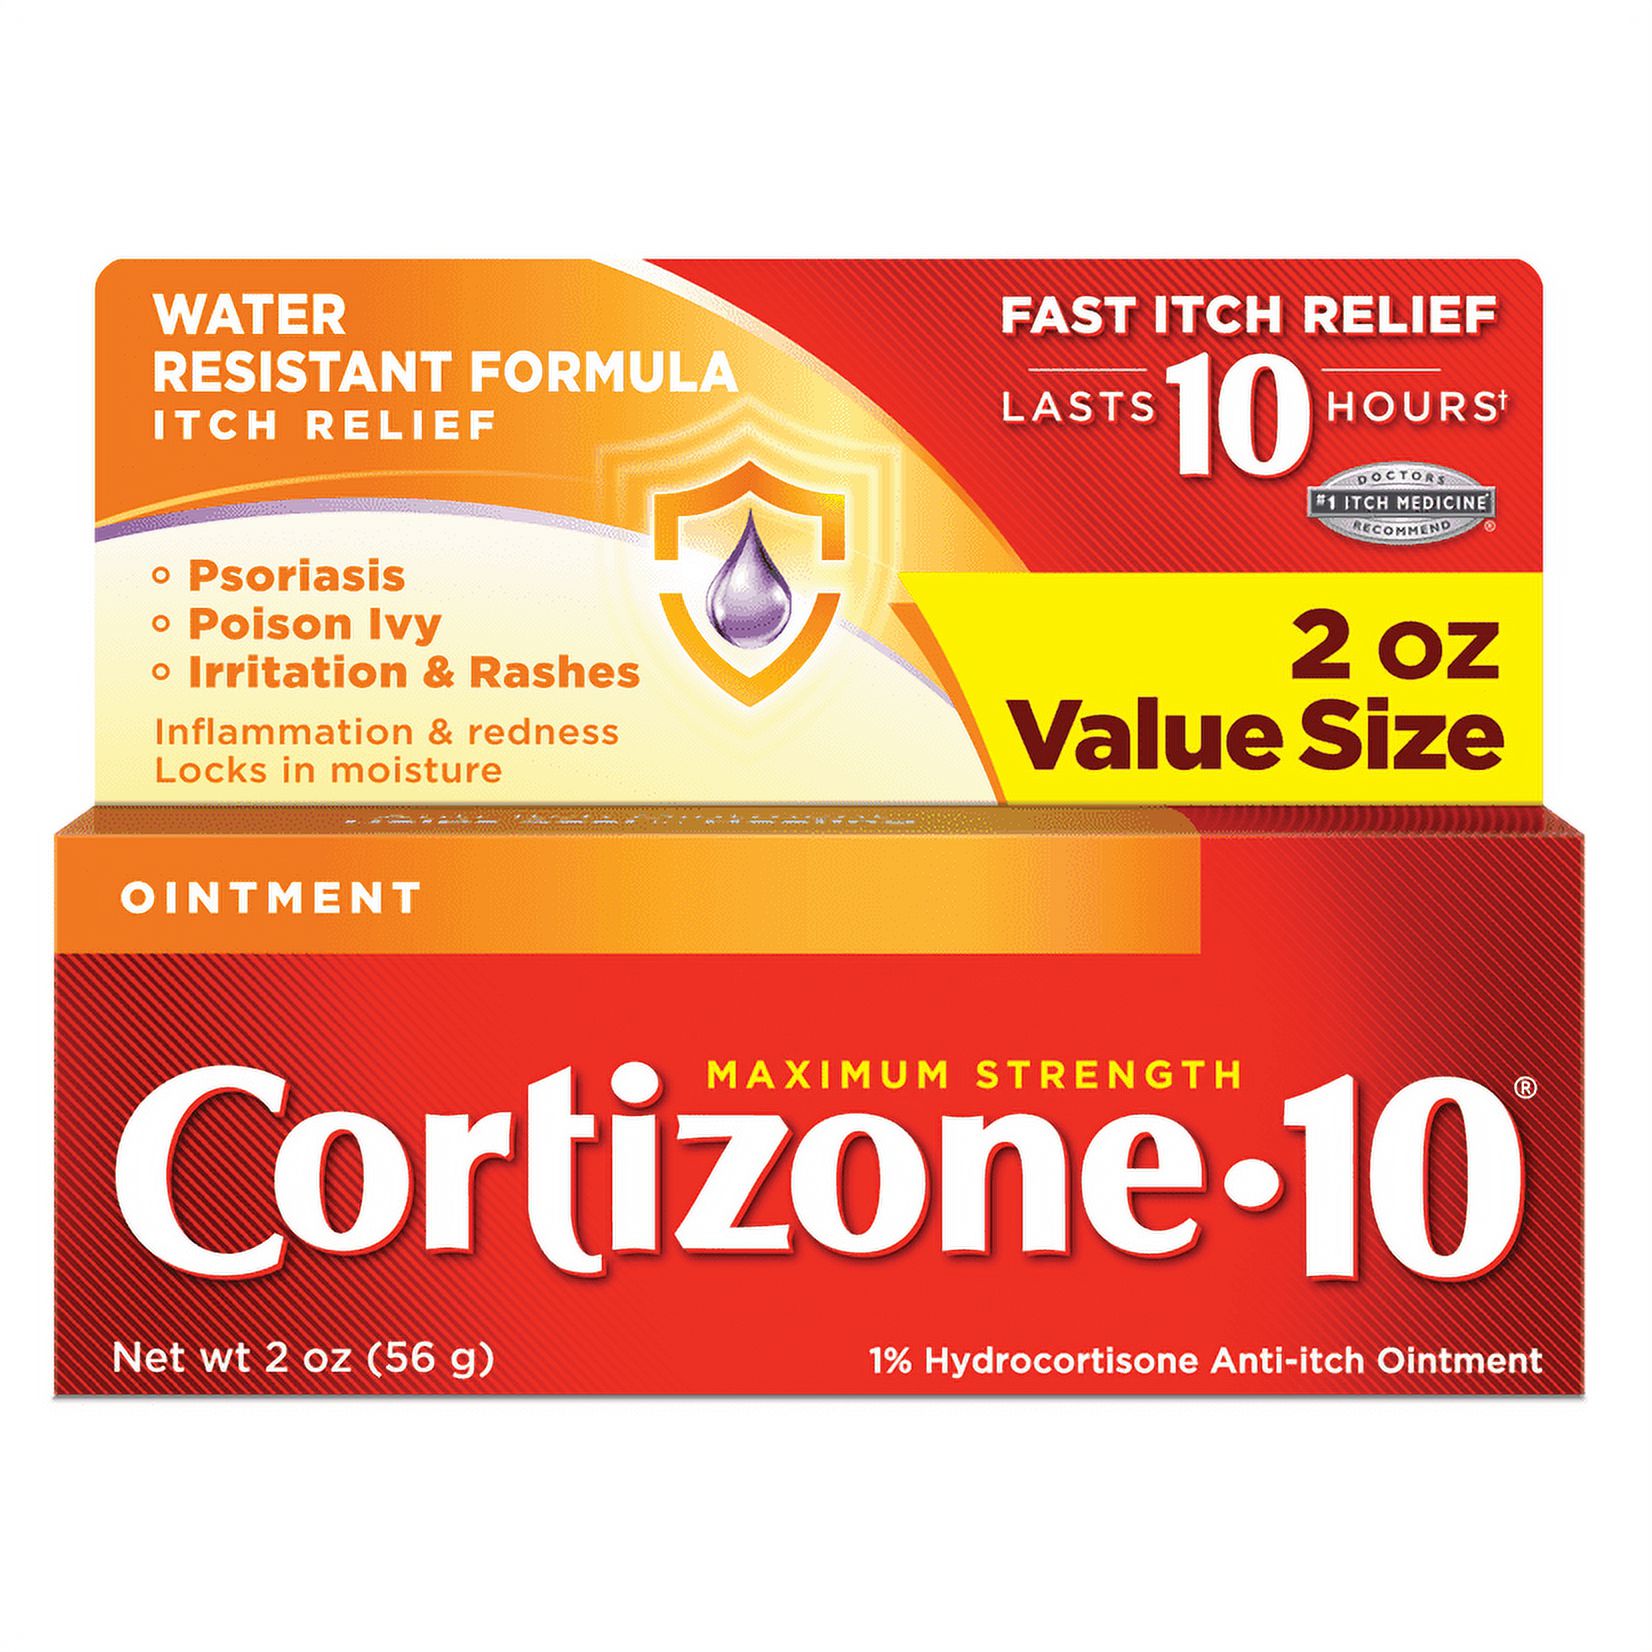 Cortizone-10 Anti-Itch Ointment 2 oz, Value Size - image 1 of 8